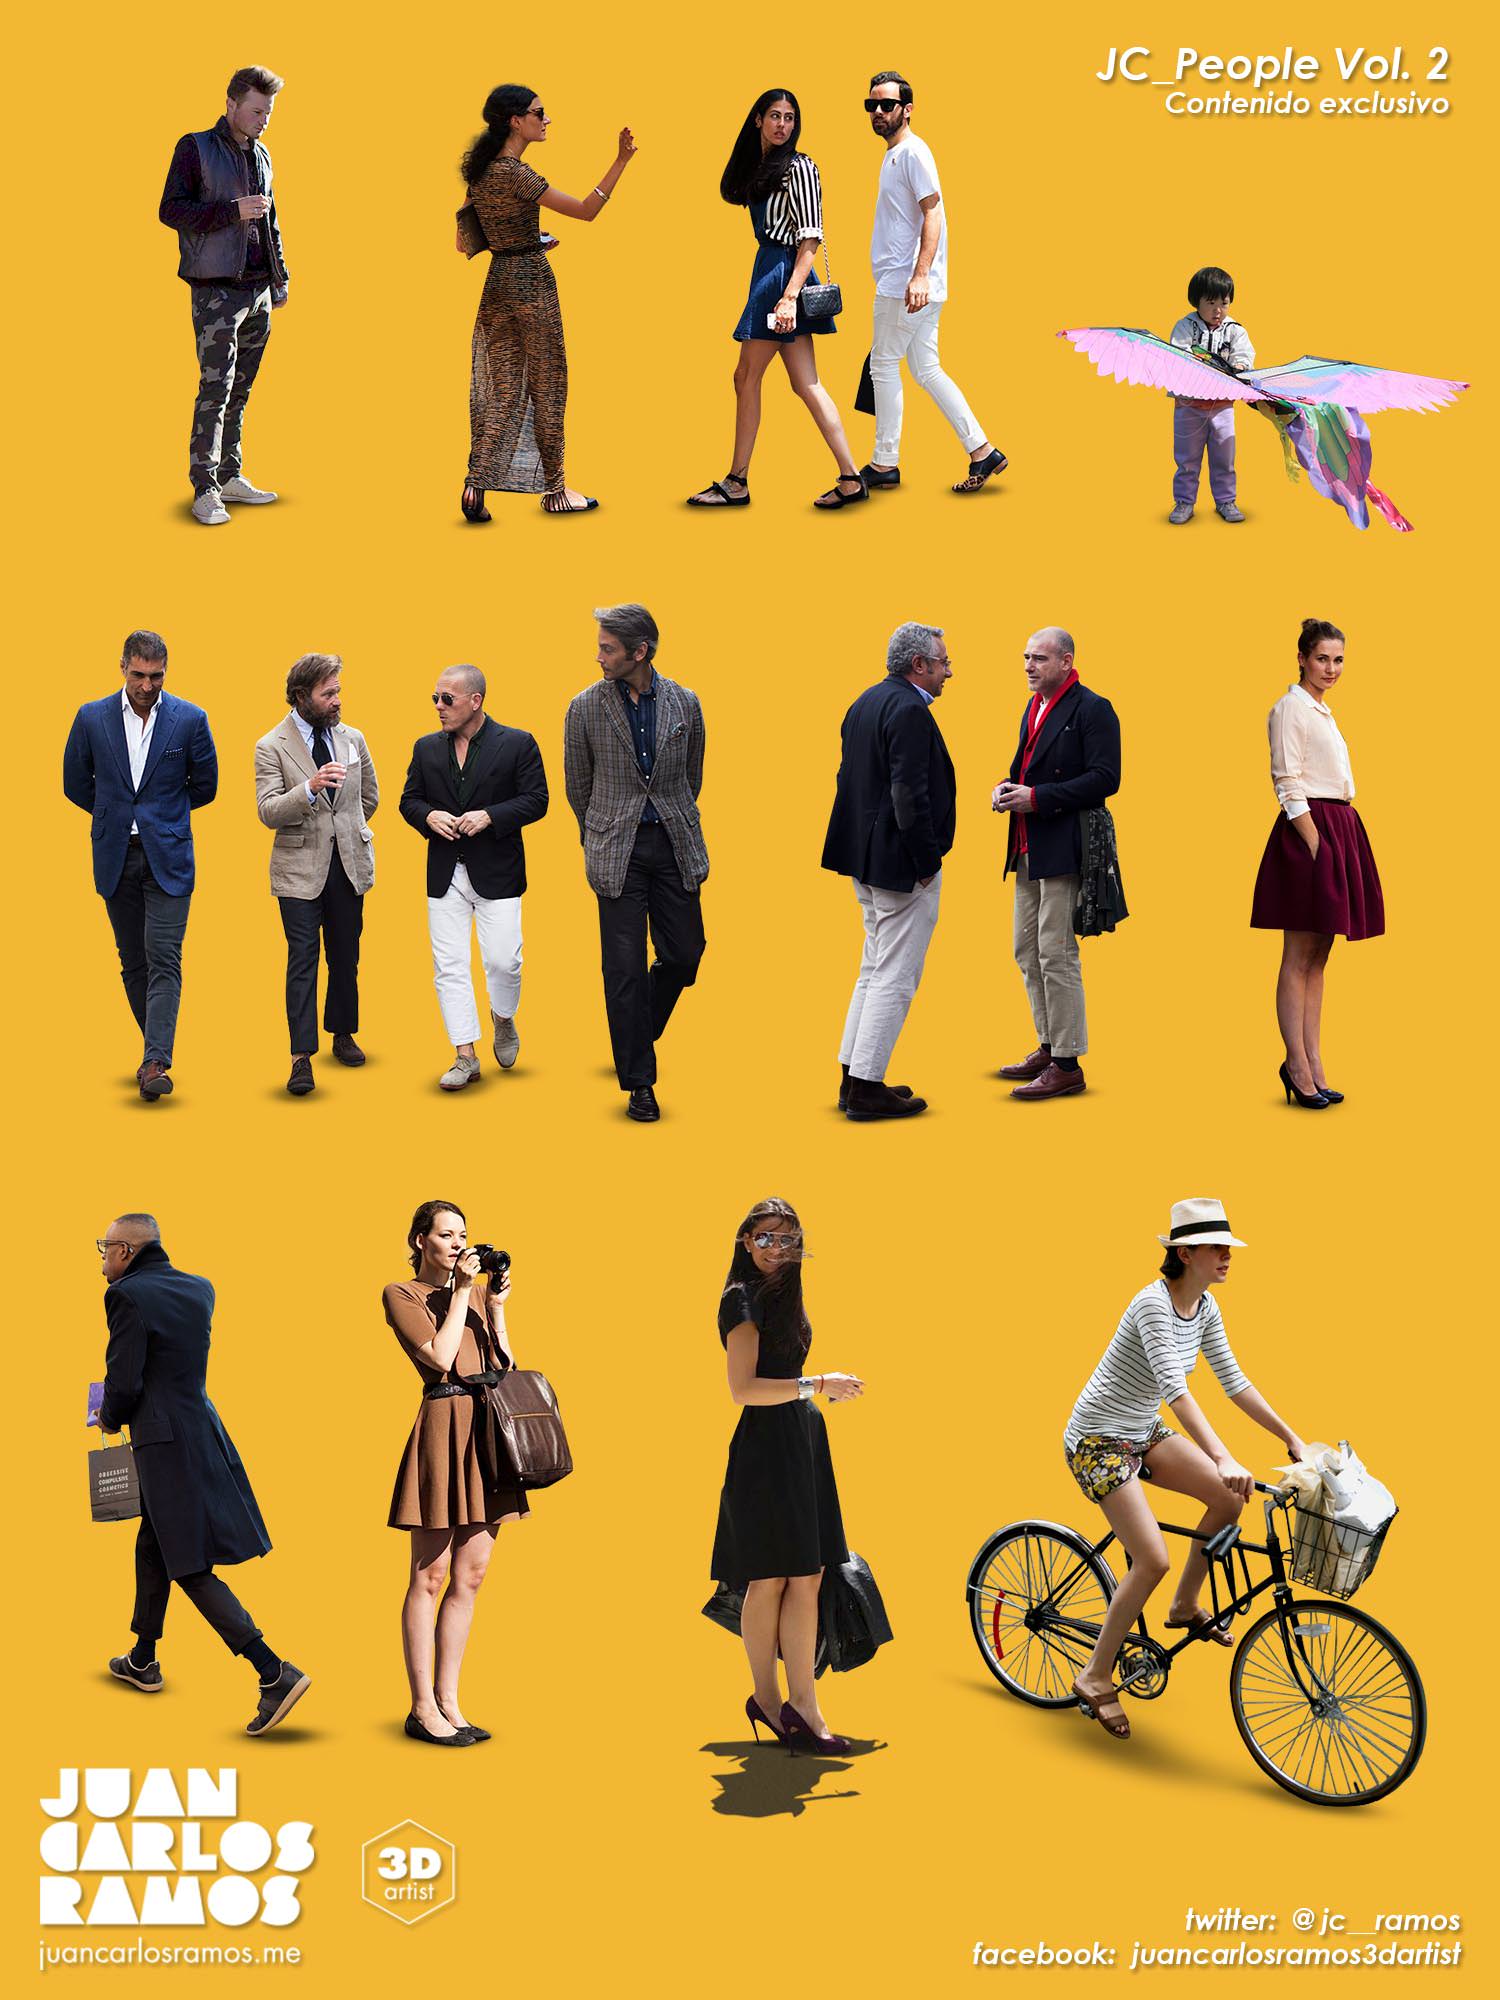 10 Free 2D Cut Out People By Juan Carlos Ramos